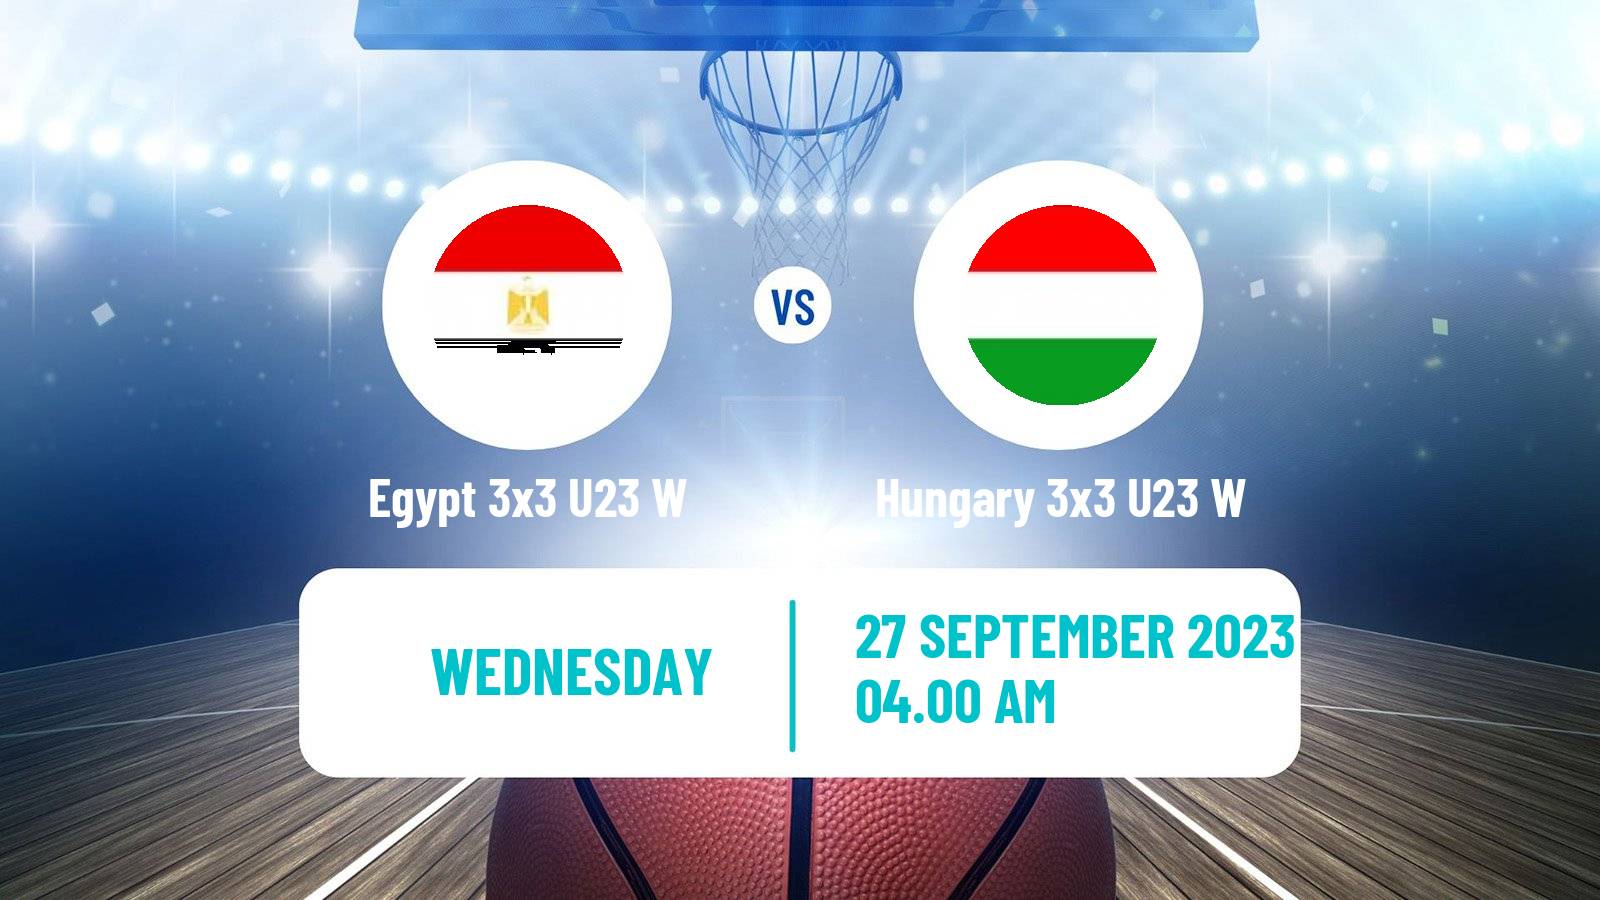 Basketball World Cup Basketball 3x3 U23 Women Egypt 3x3 U23 W - Hungary 3x3 U23 W